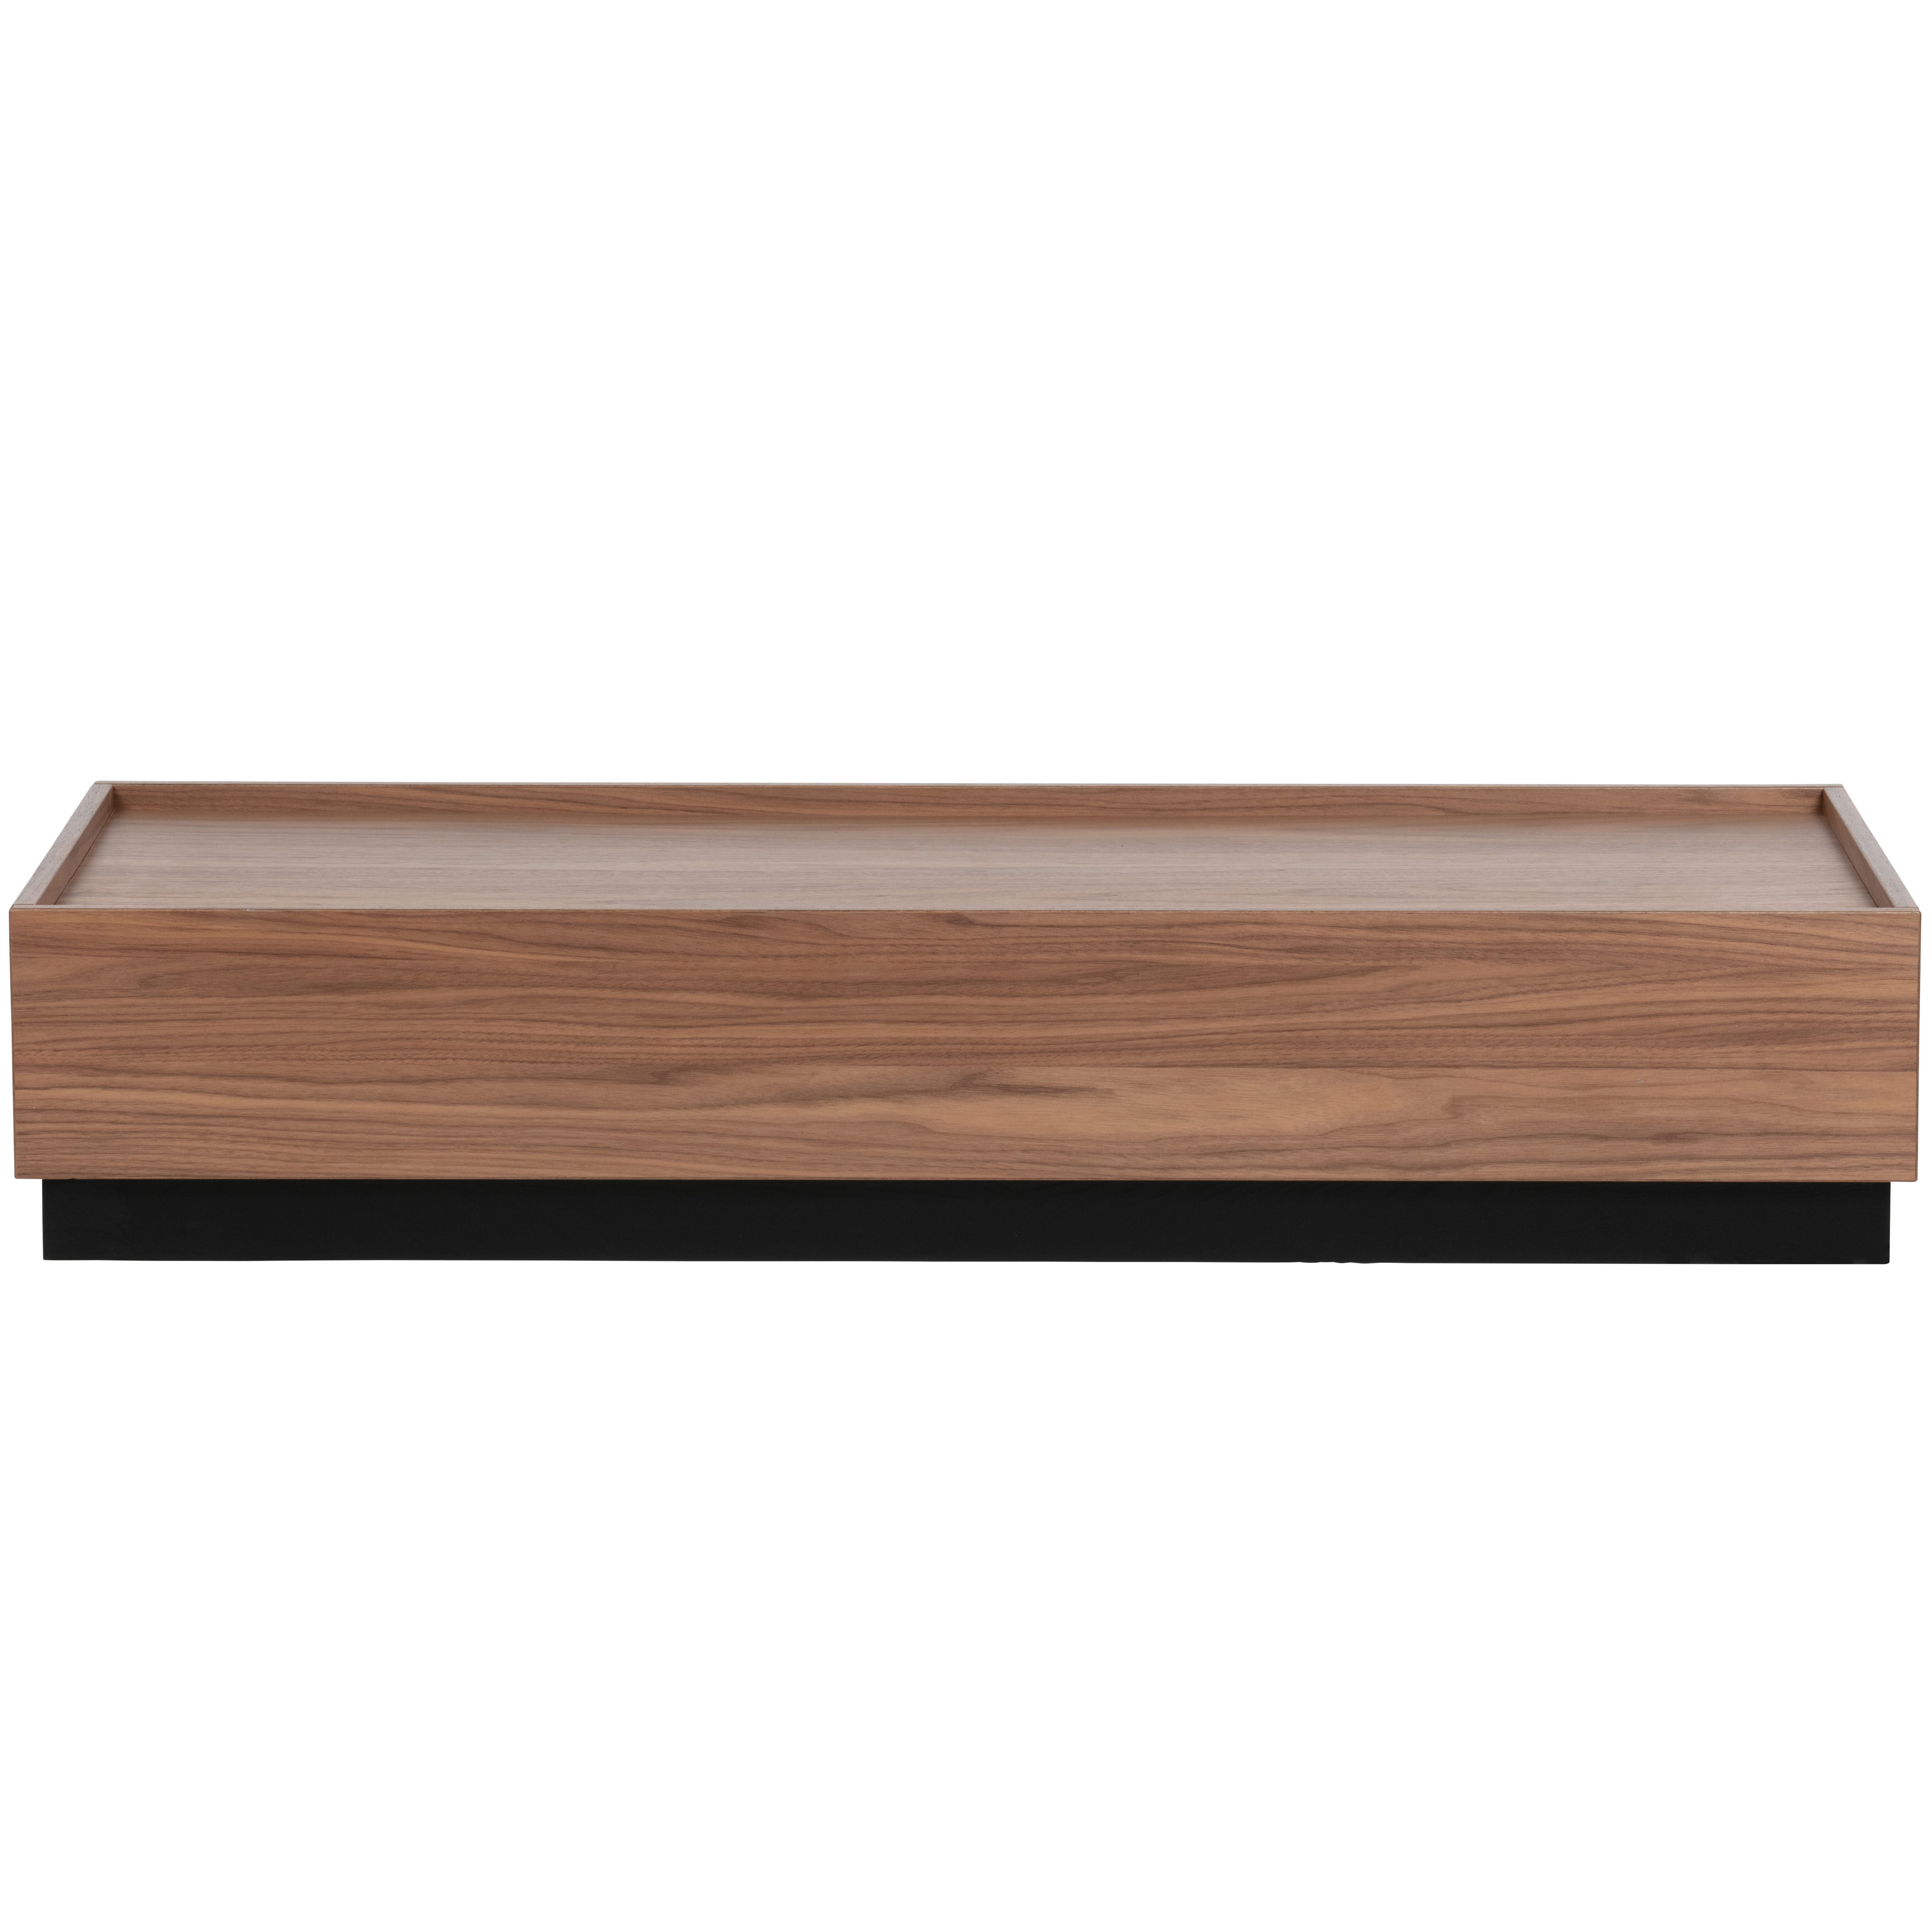 Table basse en bois 135x60cm